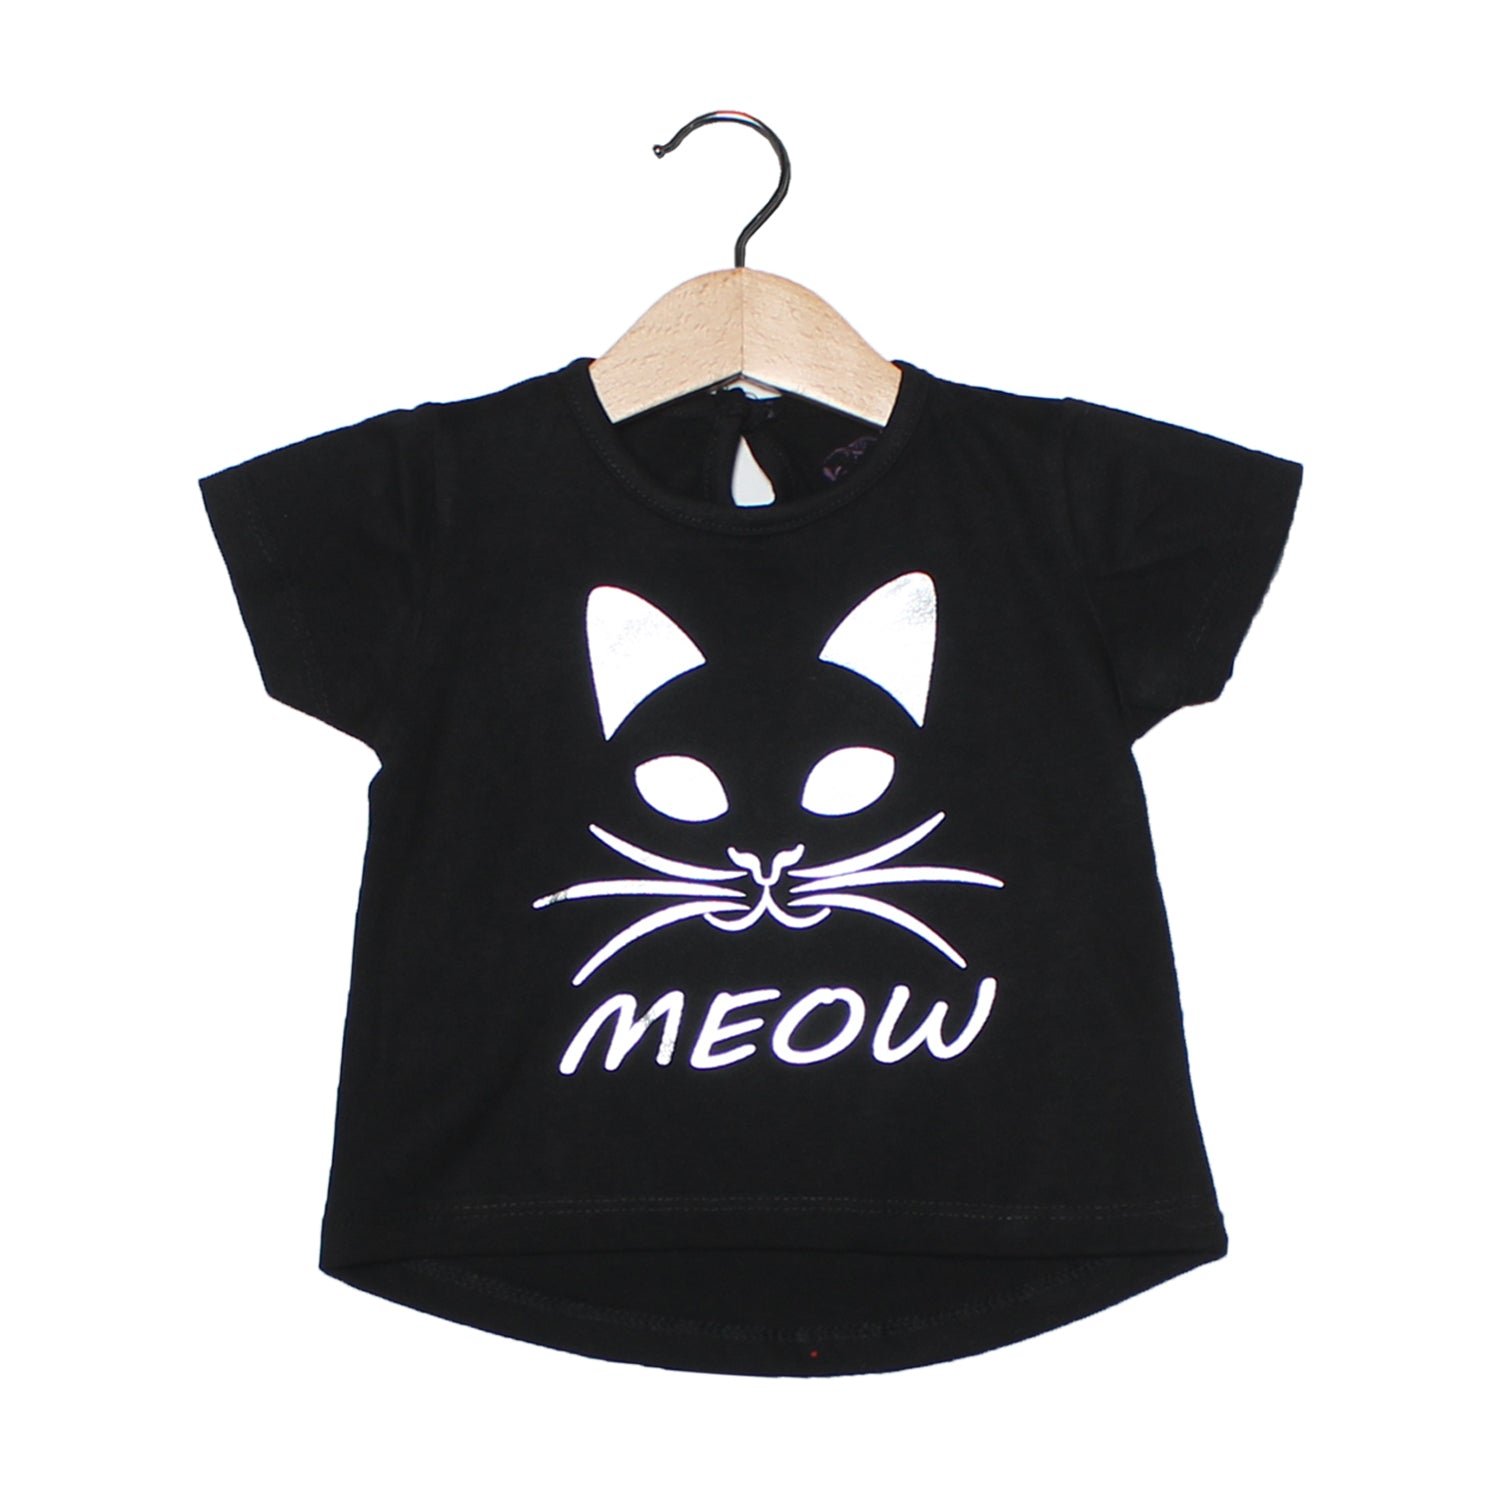 BLACK MEOW CAT PRINTED T-SHIRT TOP